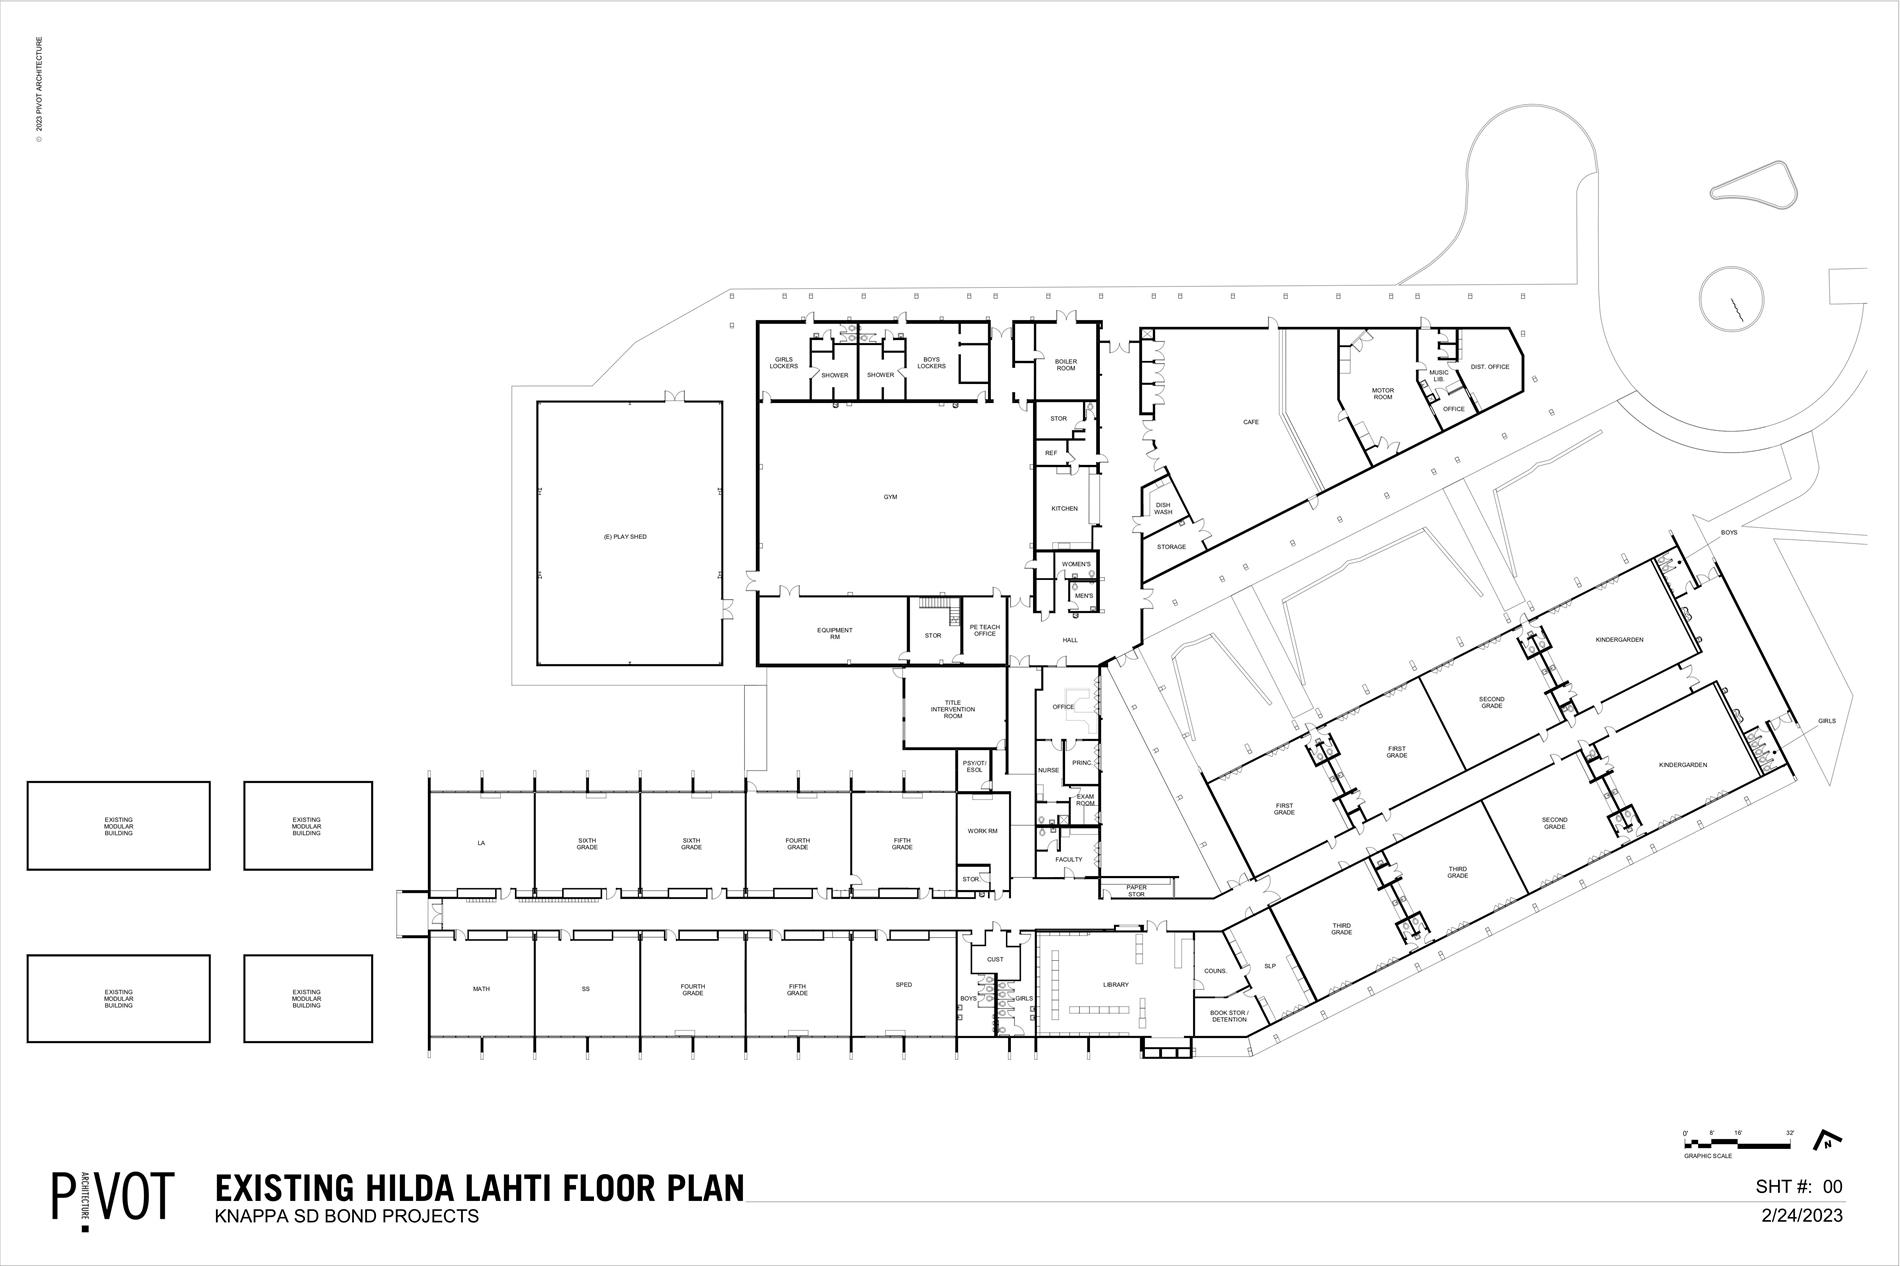 Existing Hilda Lahti floor plan draft schematic